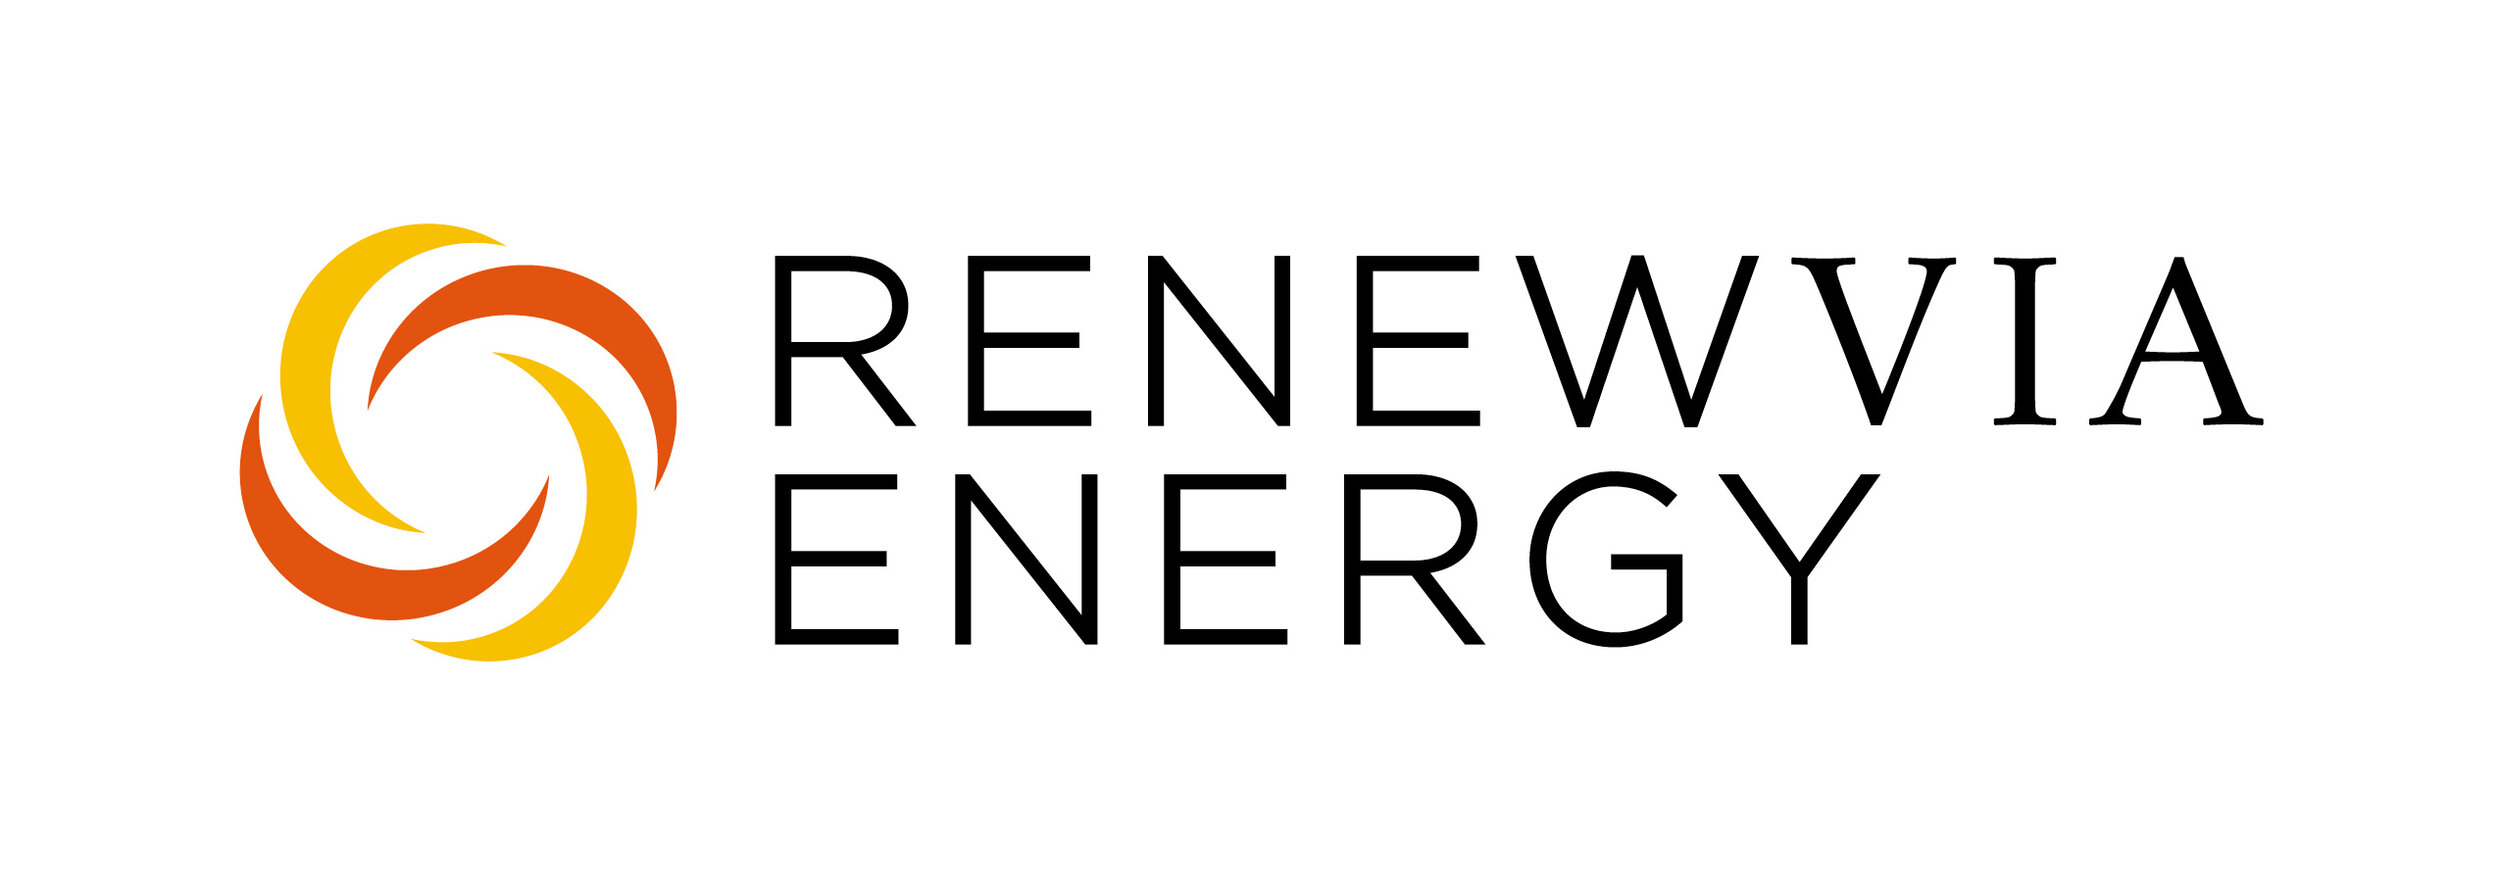 Renewvia logo main.jpg